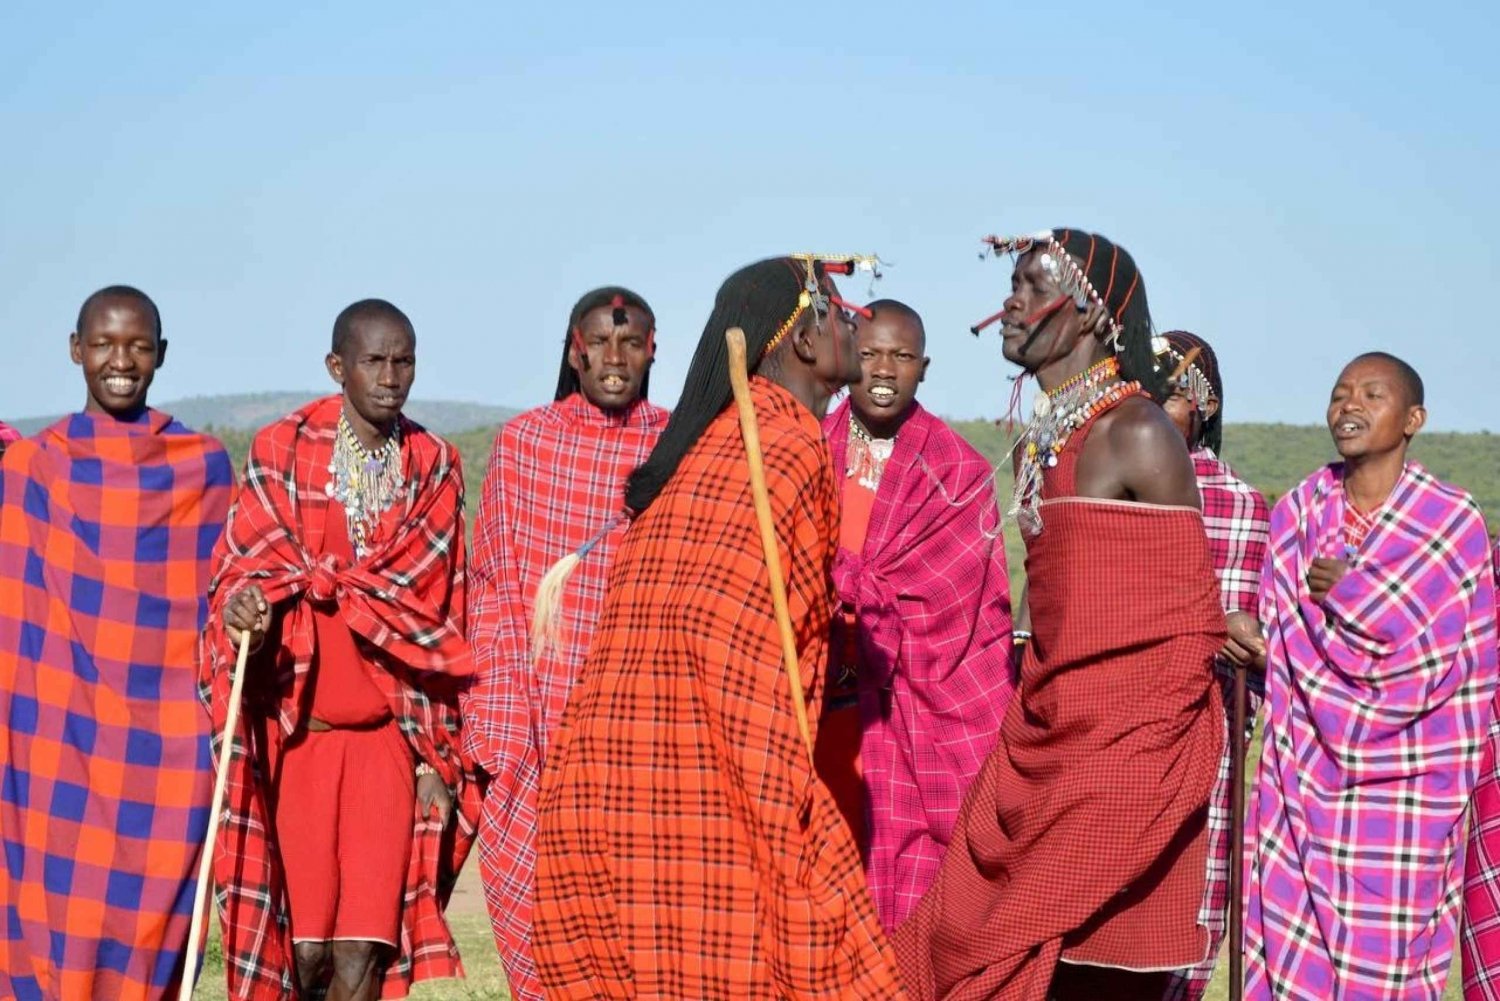 Visita à vila tradicional de Maasai saindo de Nairóbi